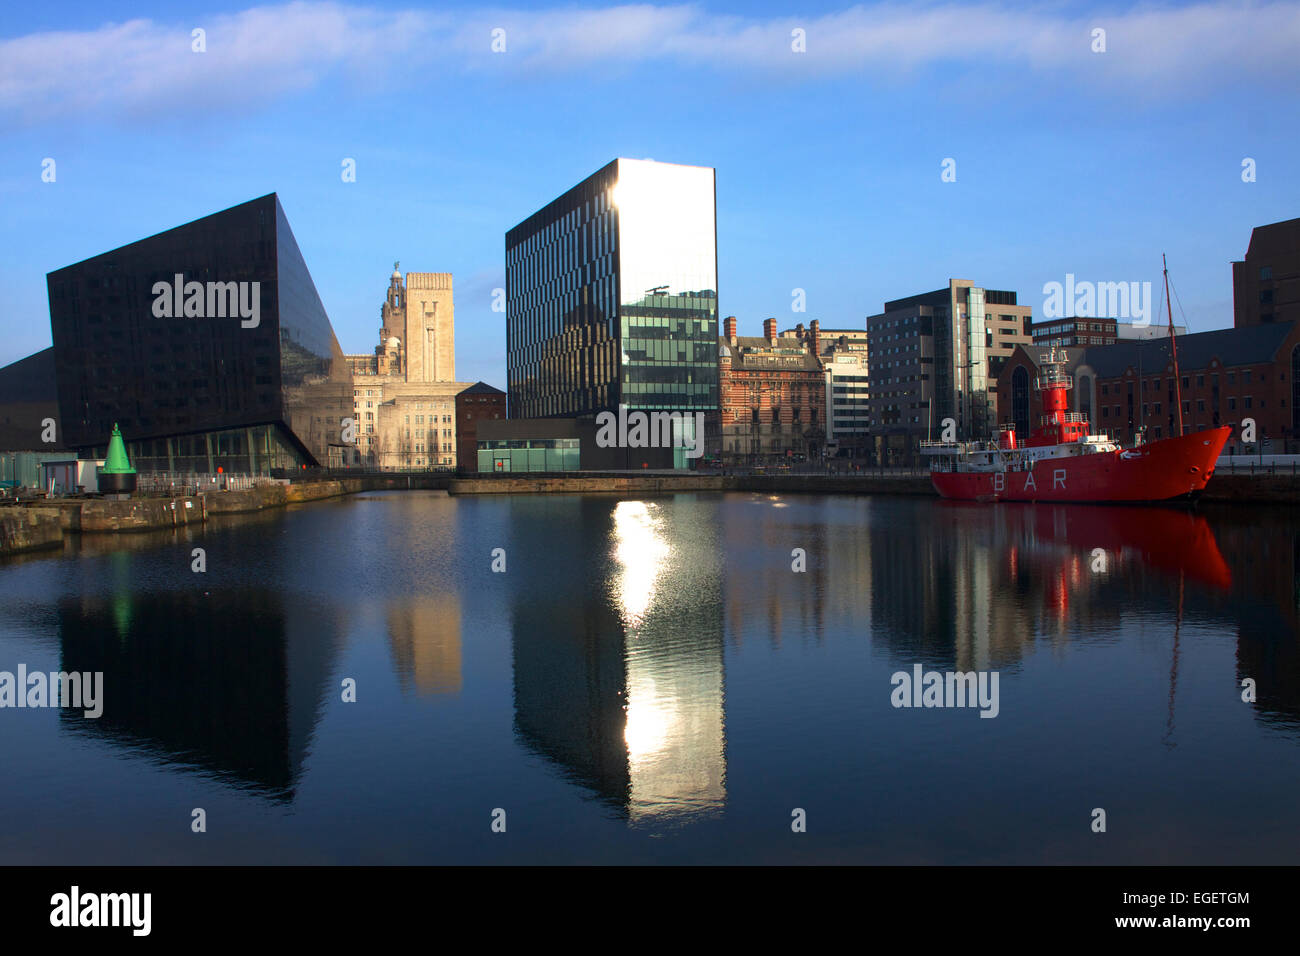 Albert docks, Liverpool, Merseyside, England  UK Stock Photo